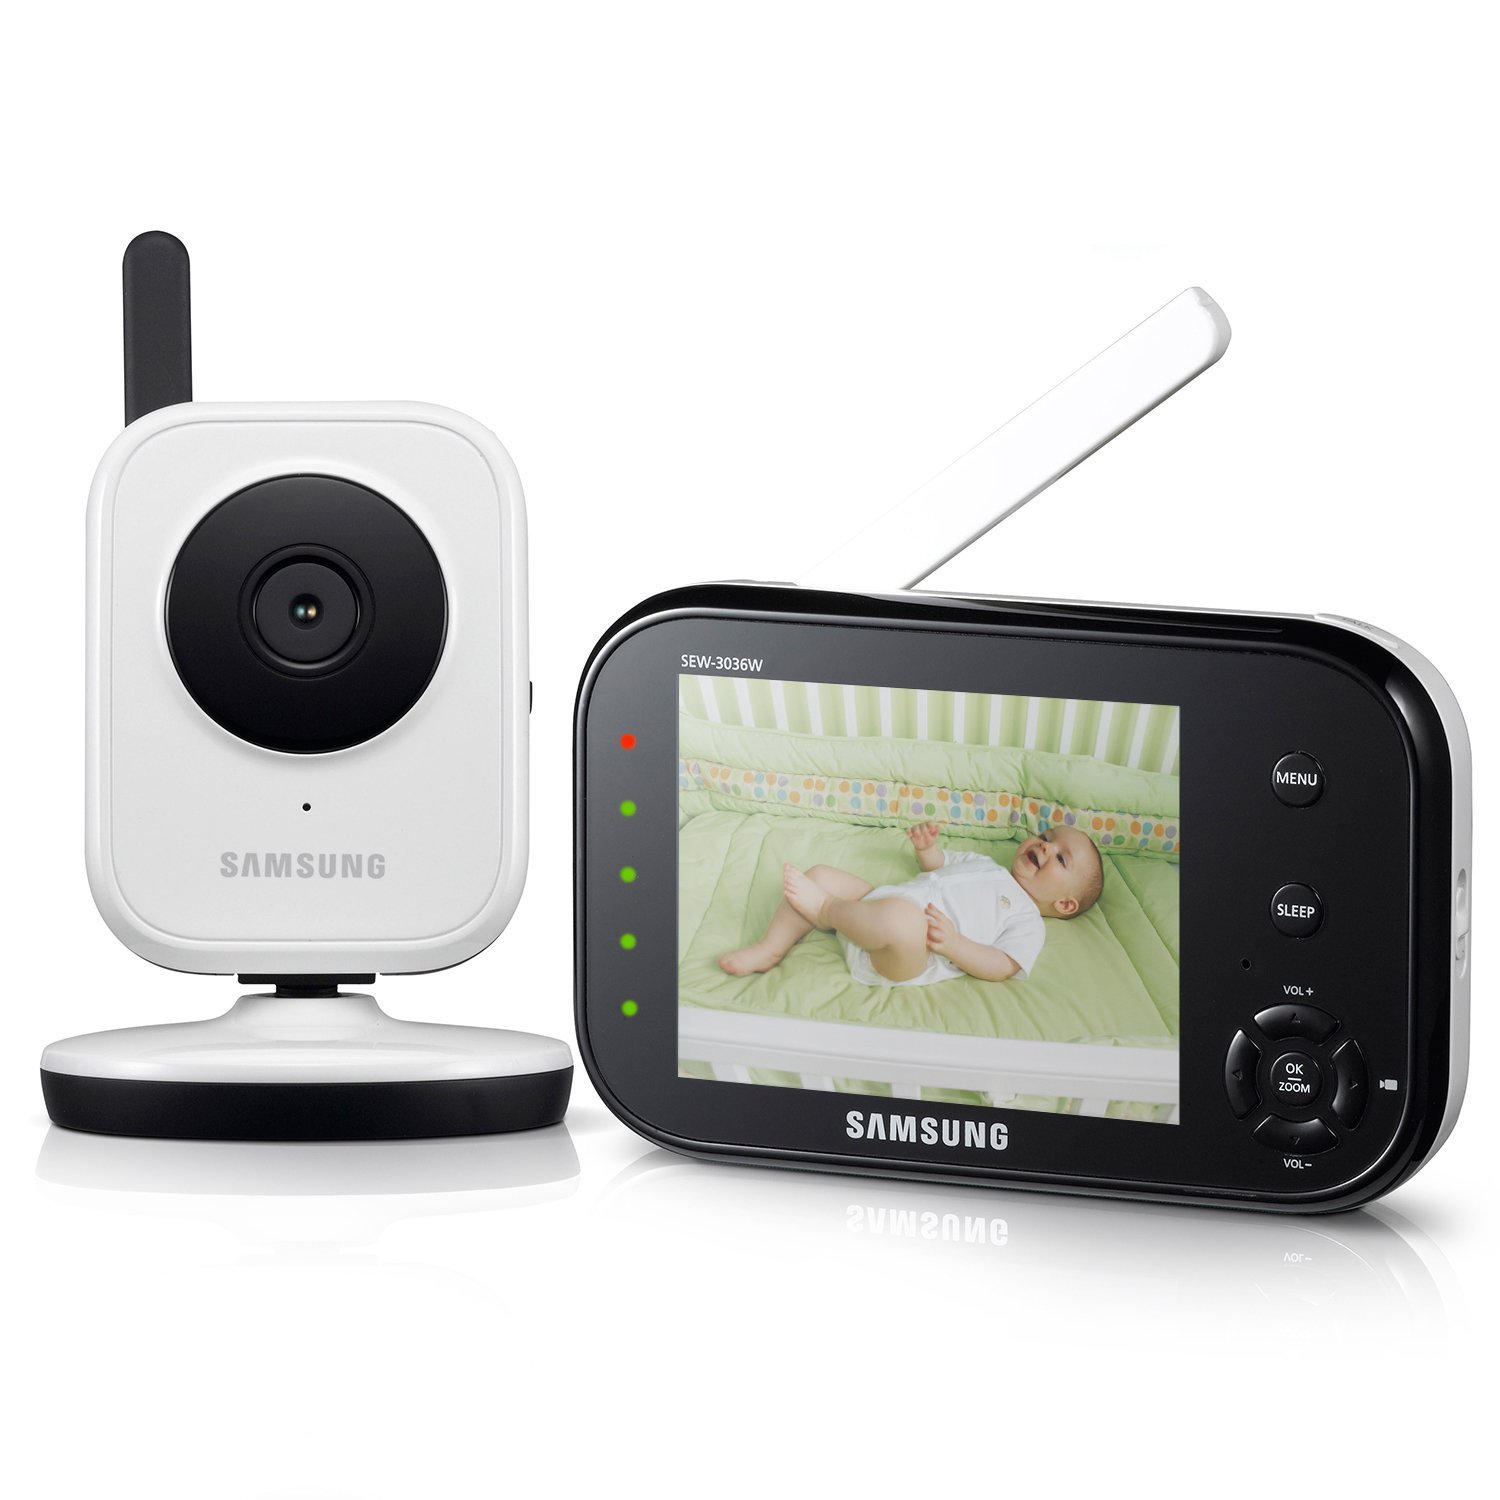 samsung-sew-3036wn-wireless-video-baby-monitor-ir-night-vision.jpg  by tnte